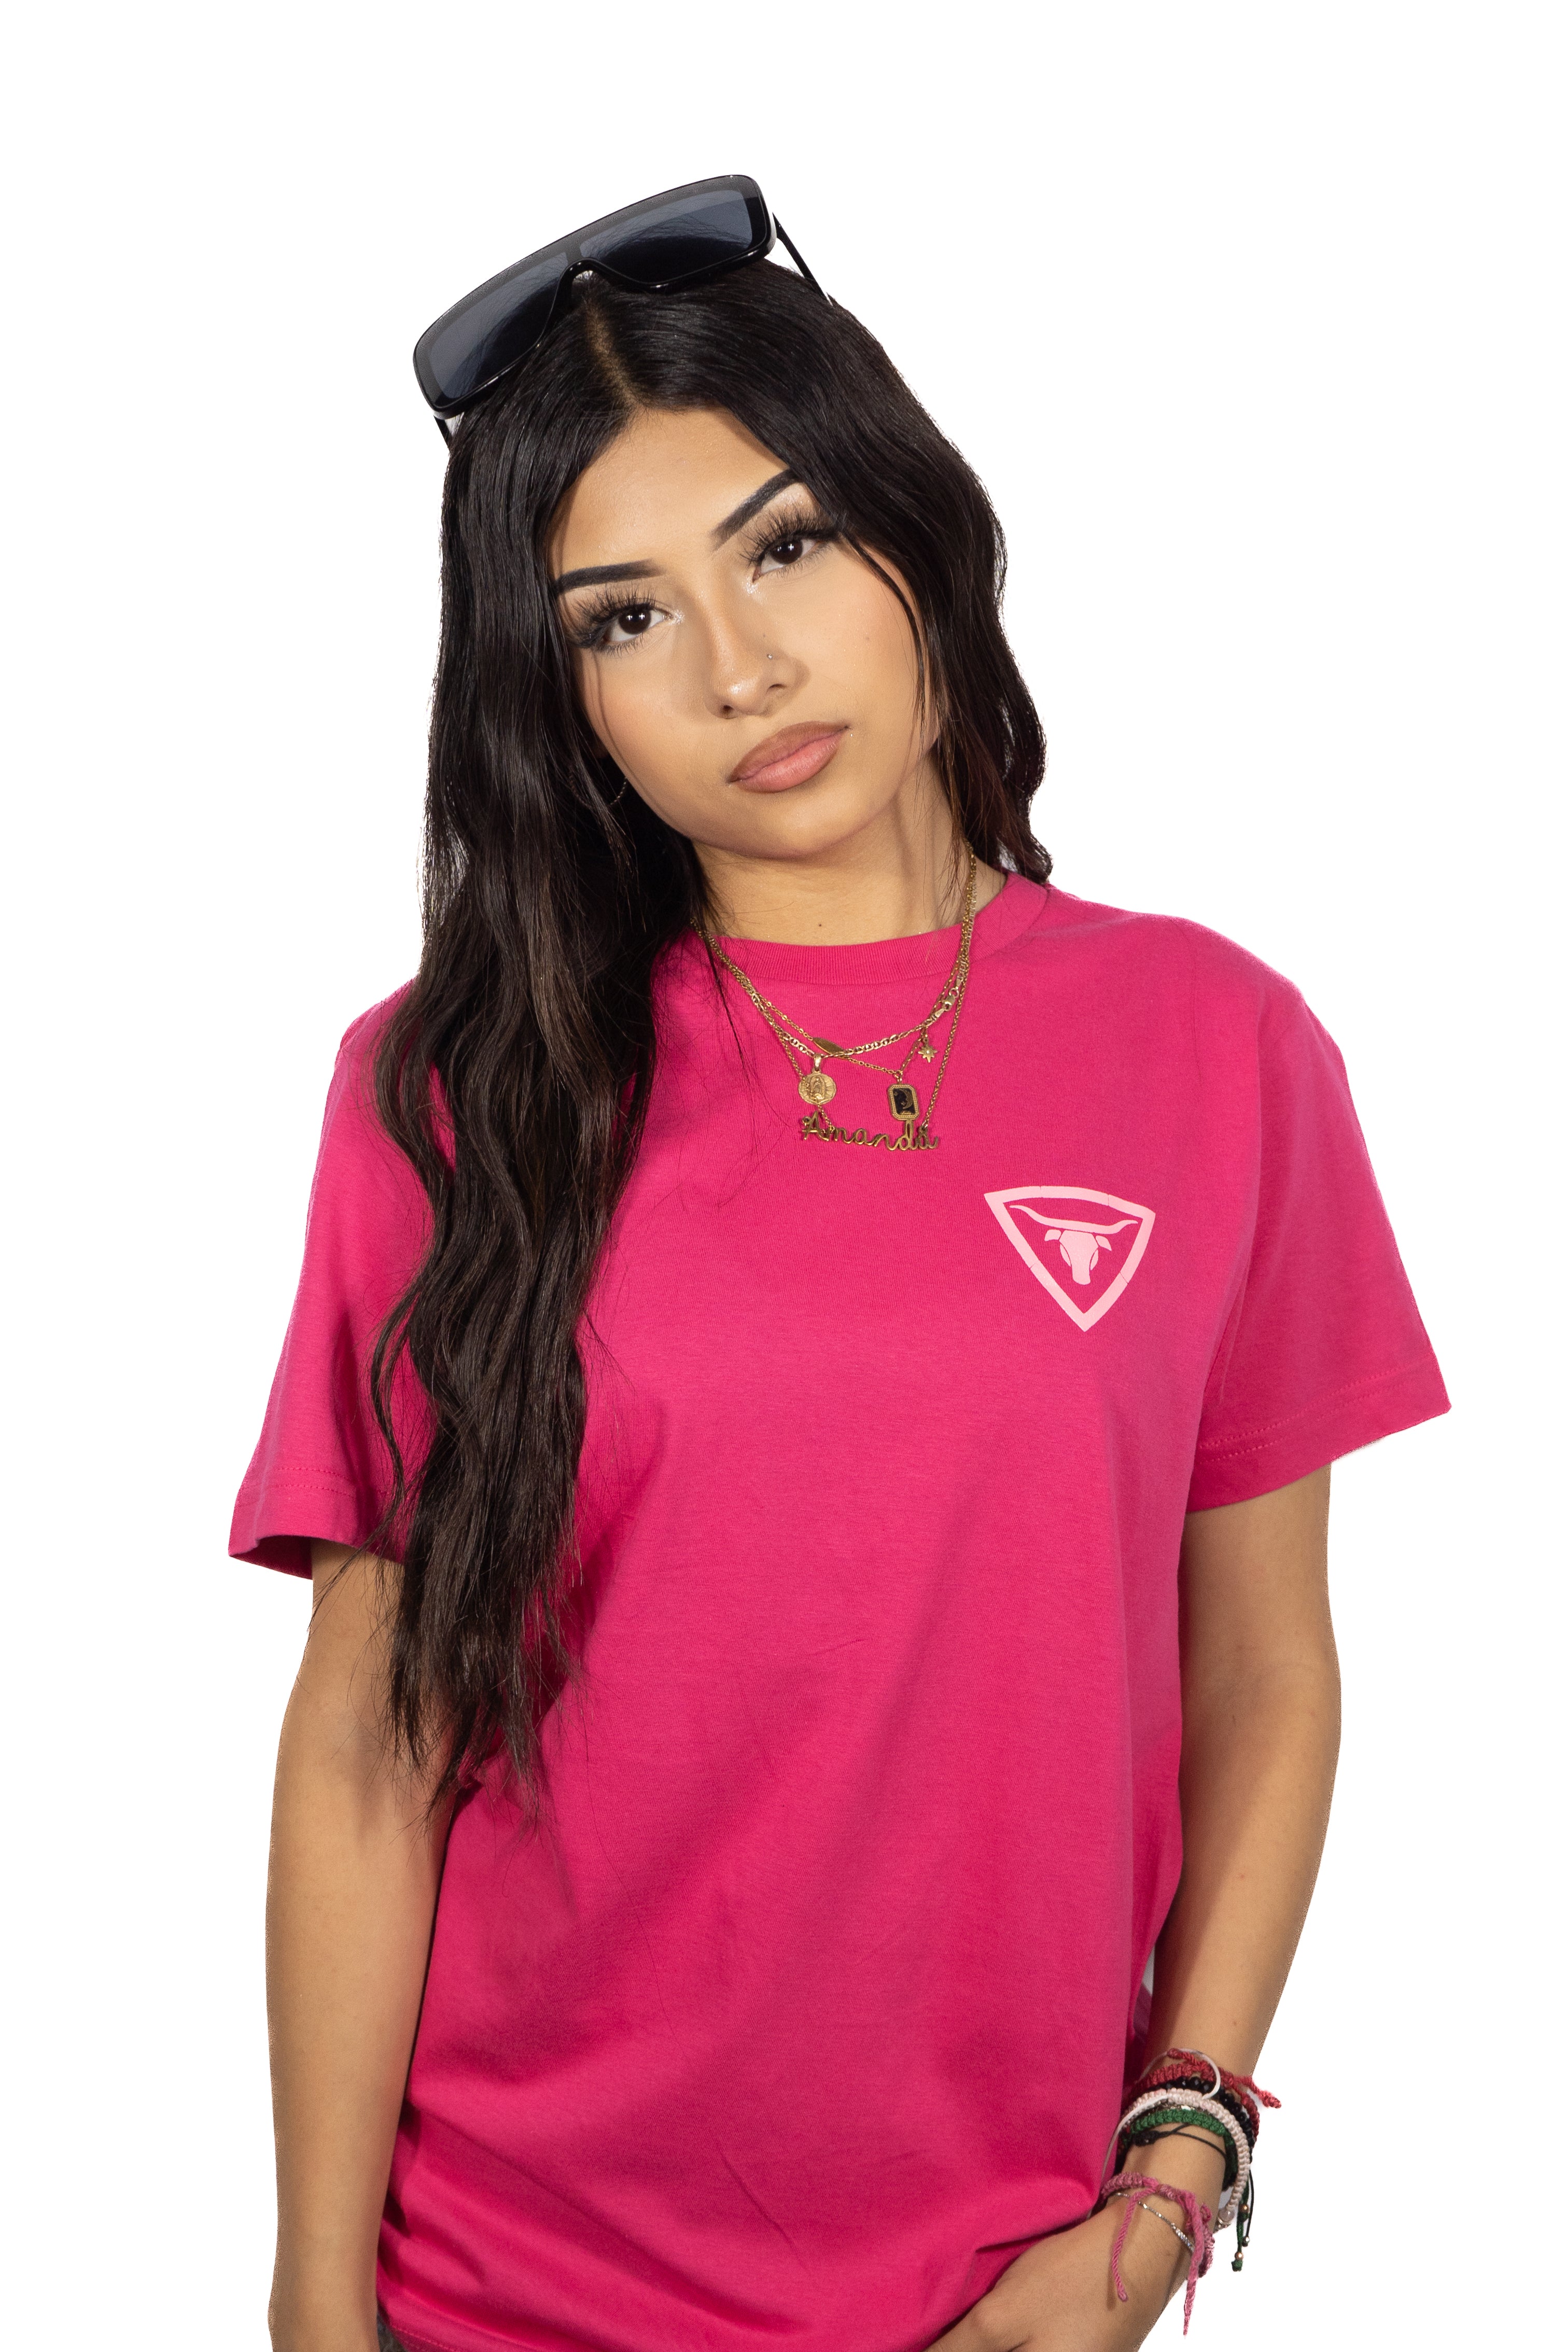 Puro Desmadre “Hot Shirt Pink” Brand - Desmadre Puro